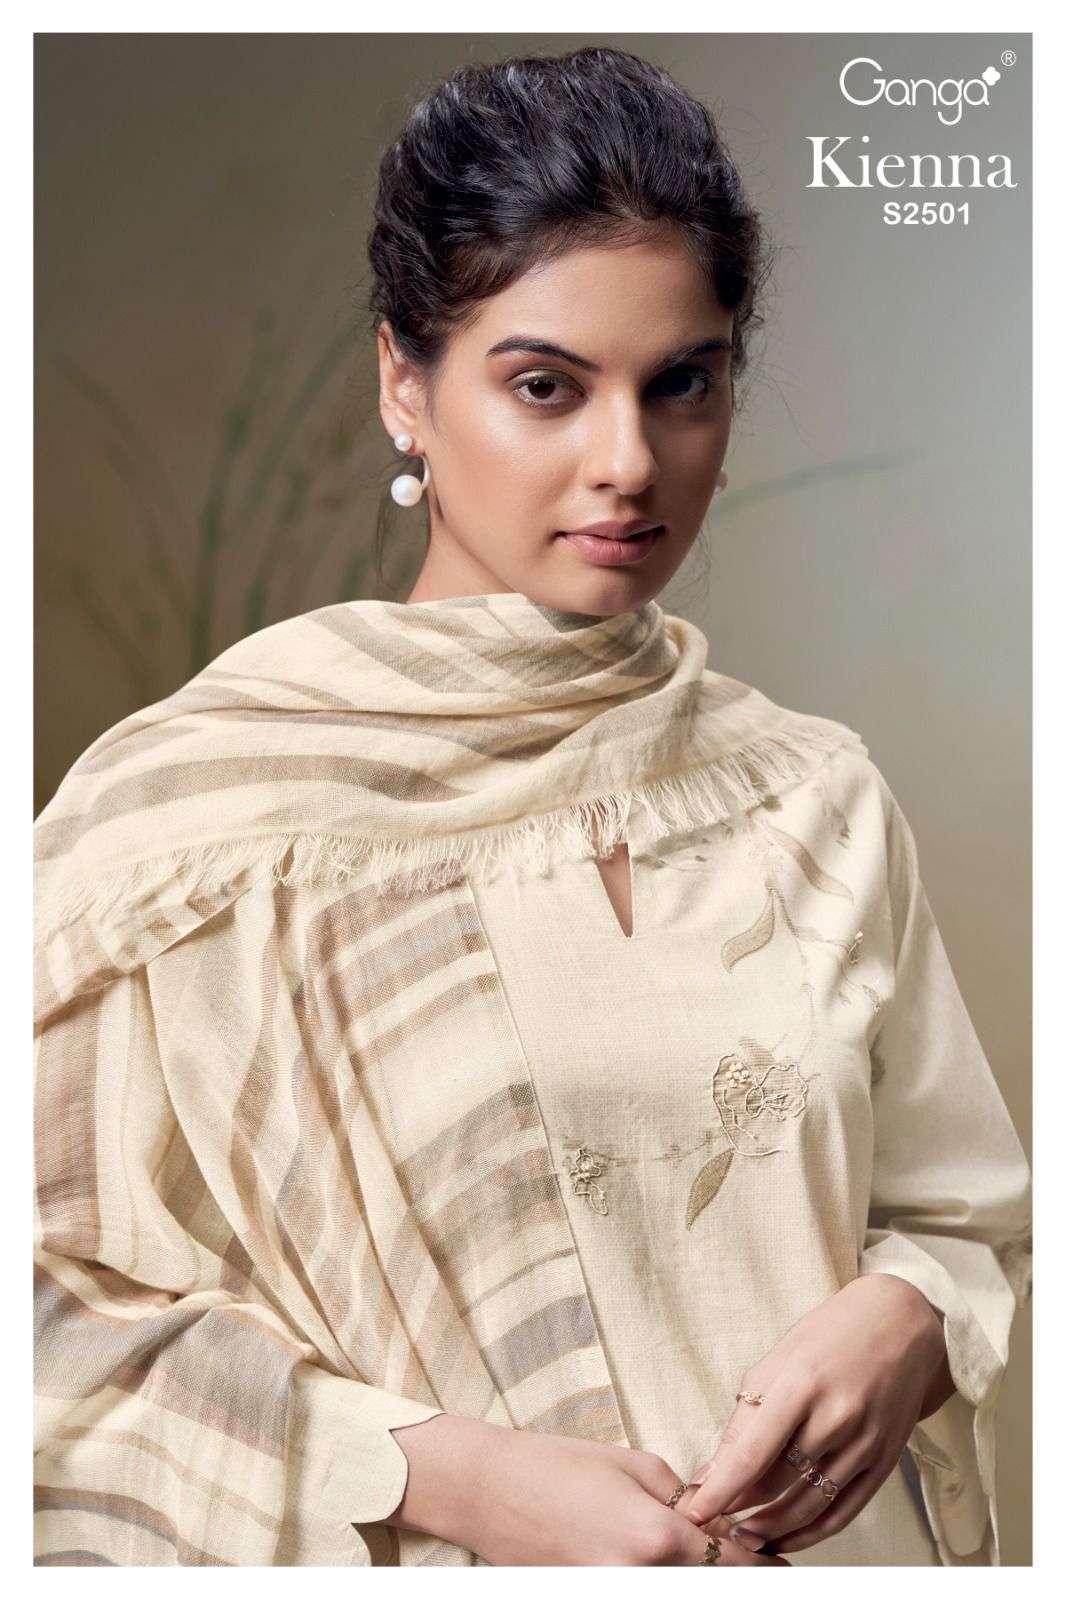 Ganga Kienna 2501 Exclusive Cotton Ladies Dress New Designs